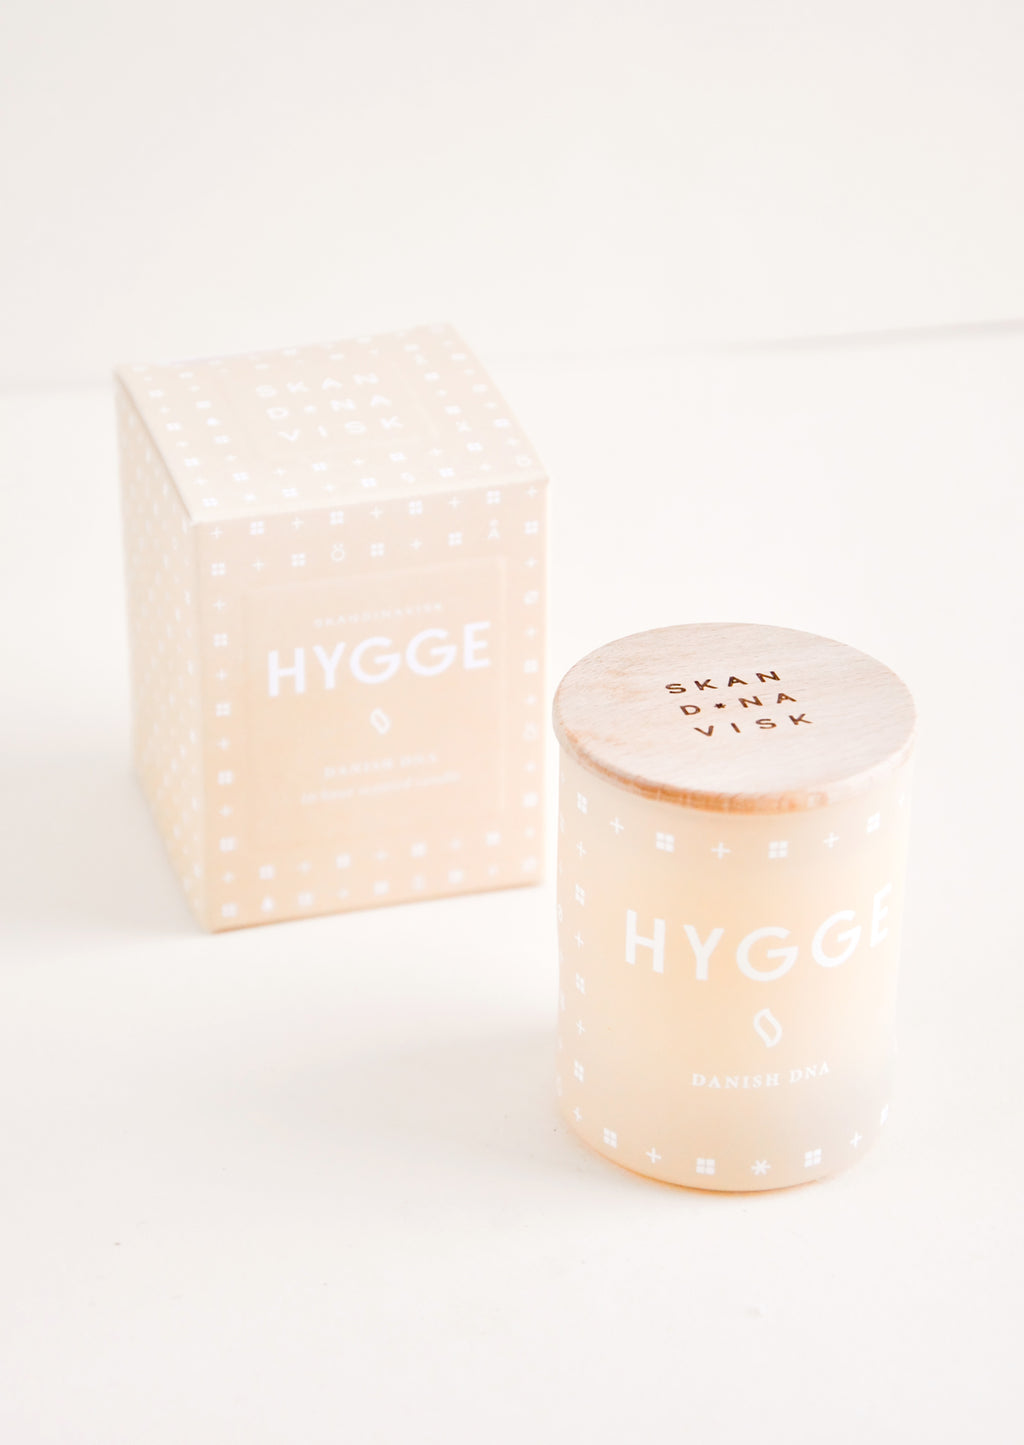 2 oz / Hygge (Coziness): Skandinavisk Candle in 2 oz / Hygge (Coziness) - LEIF